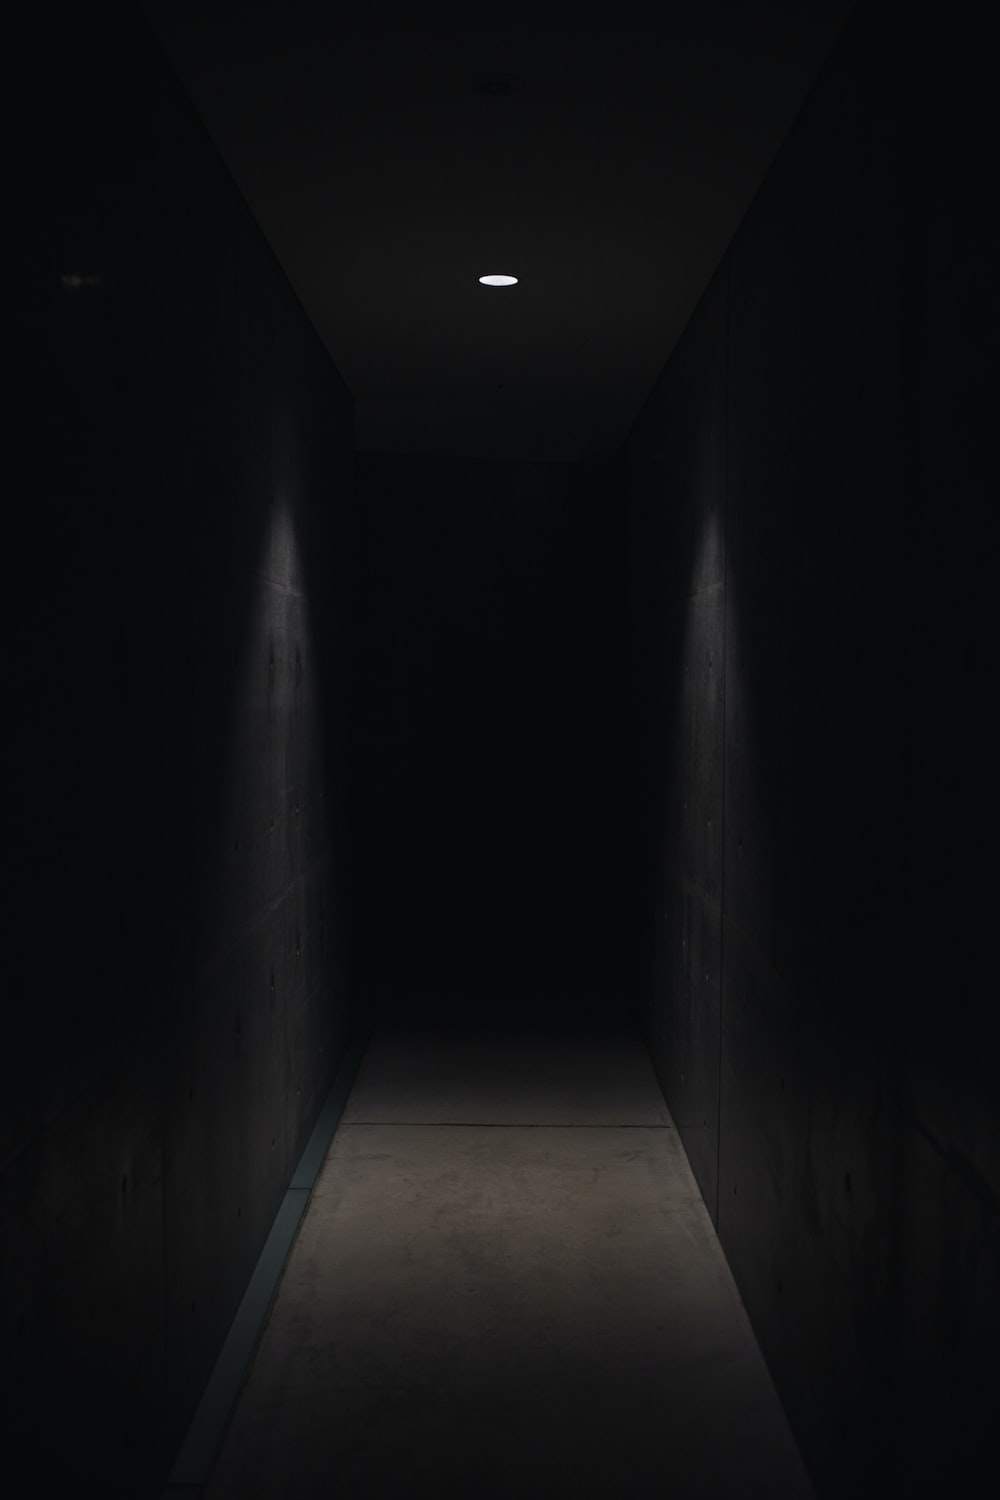 Creepy Hallway Picture. Download Free Image